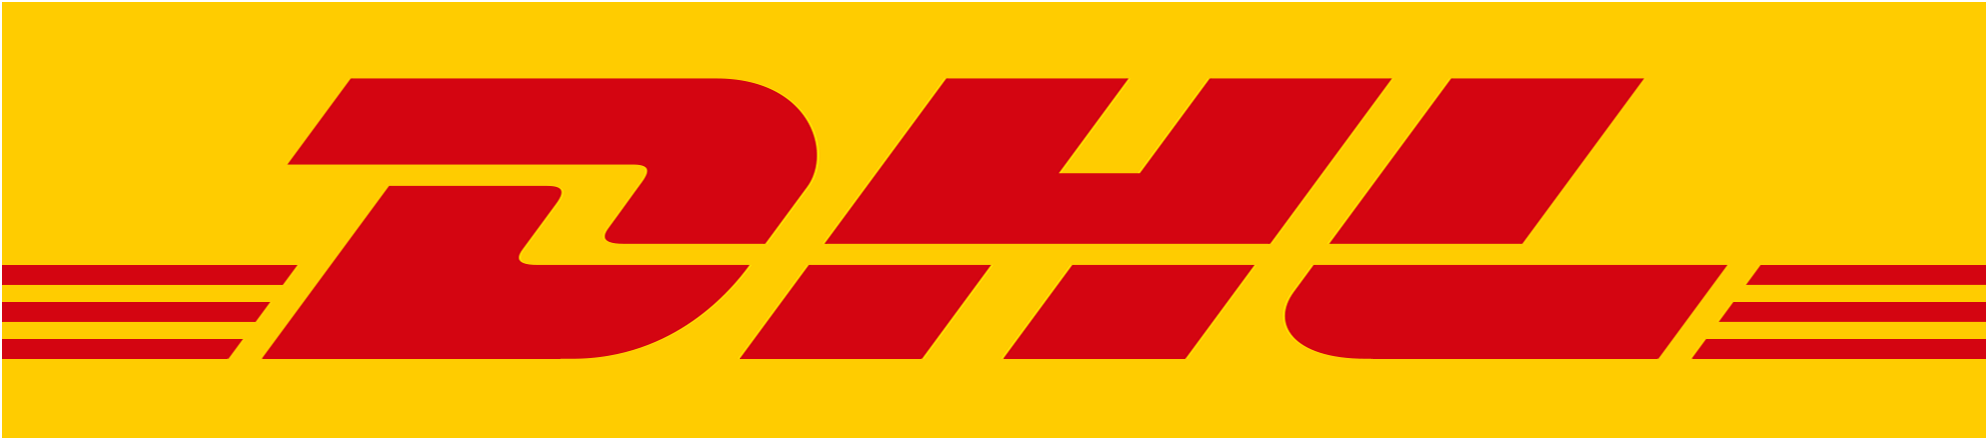 DHL Supply Chain logo